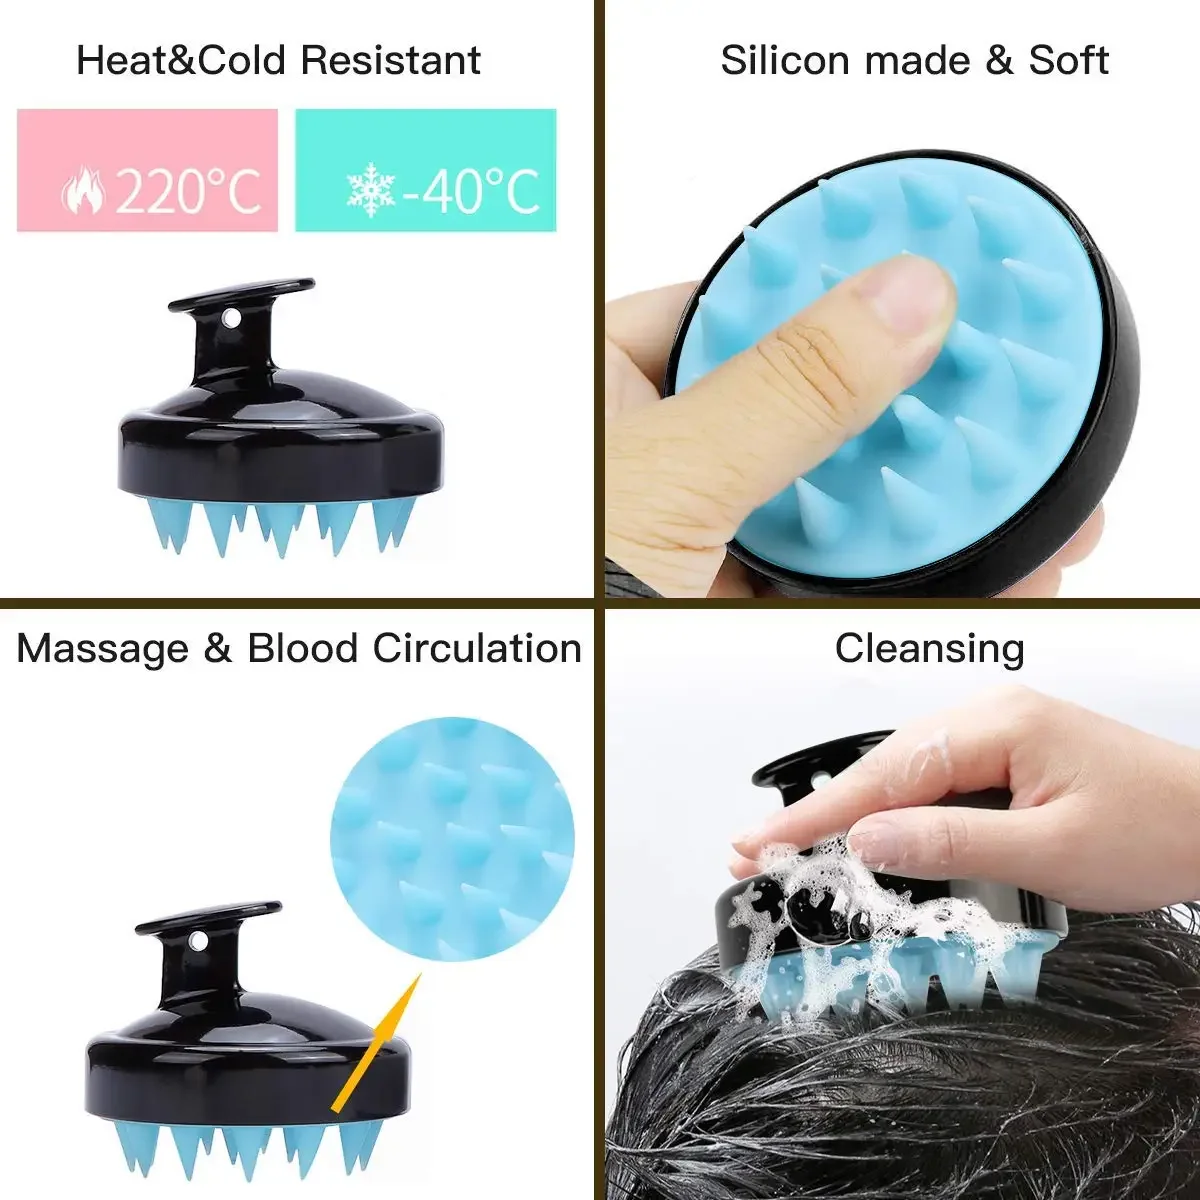 

Zhangji Hair Comb Massage Scalp Care Flexible Silicone Shampoo Brush Remove Dandruff and Exfoliate Stimulate Hair Growth